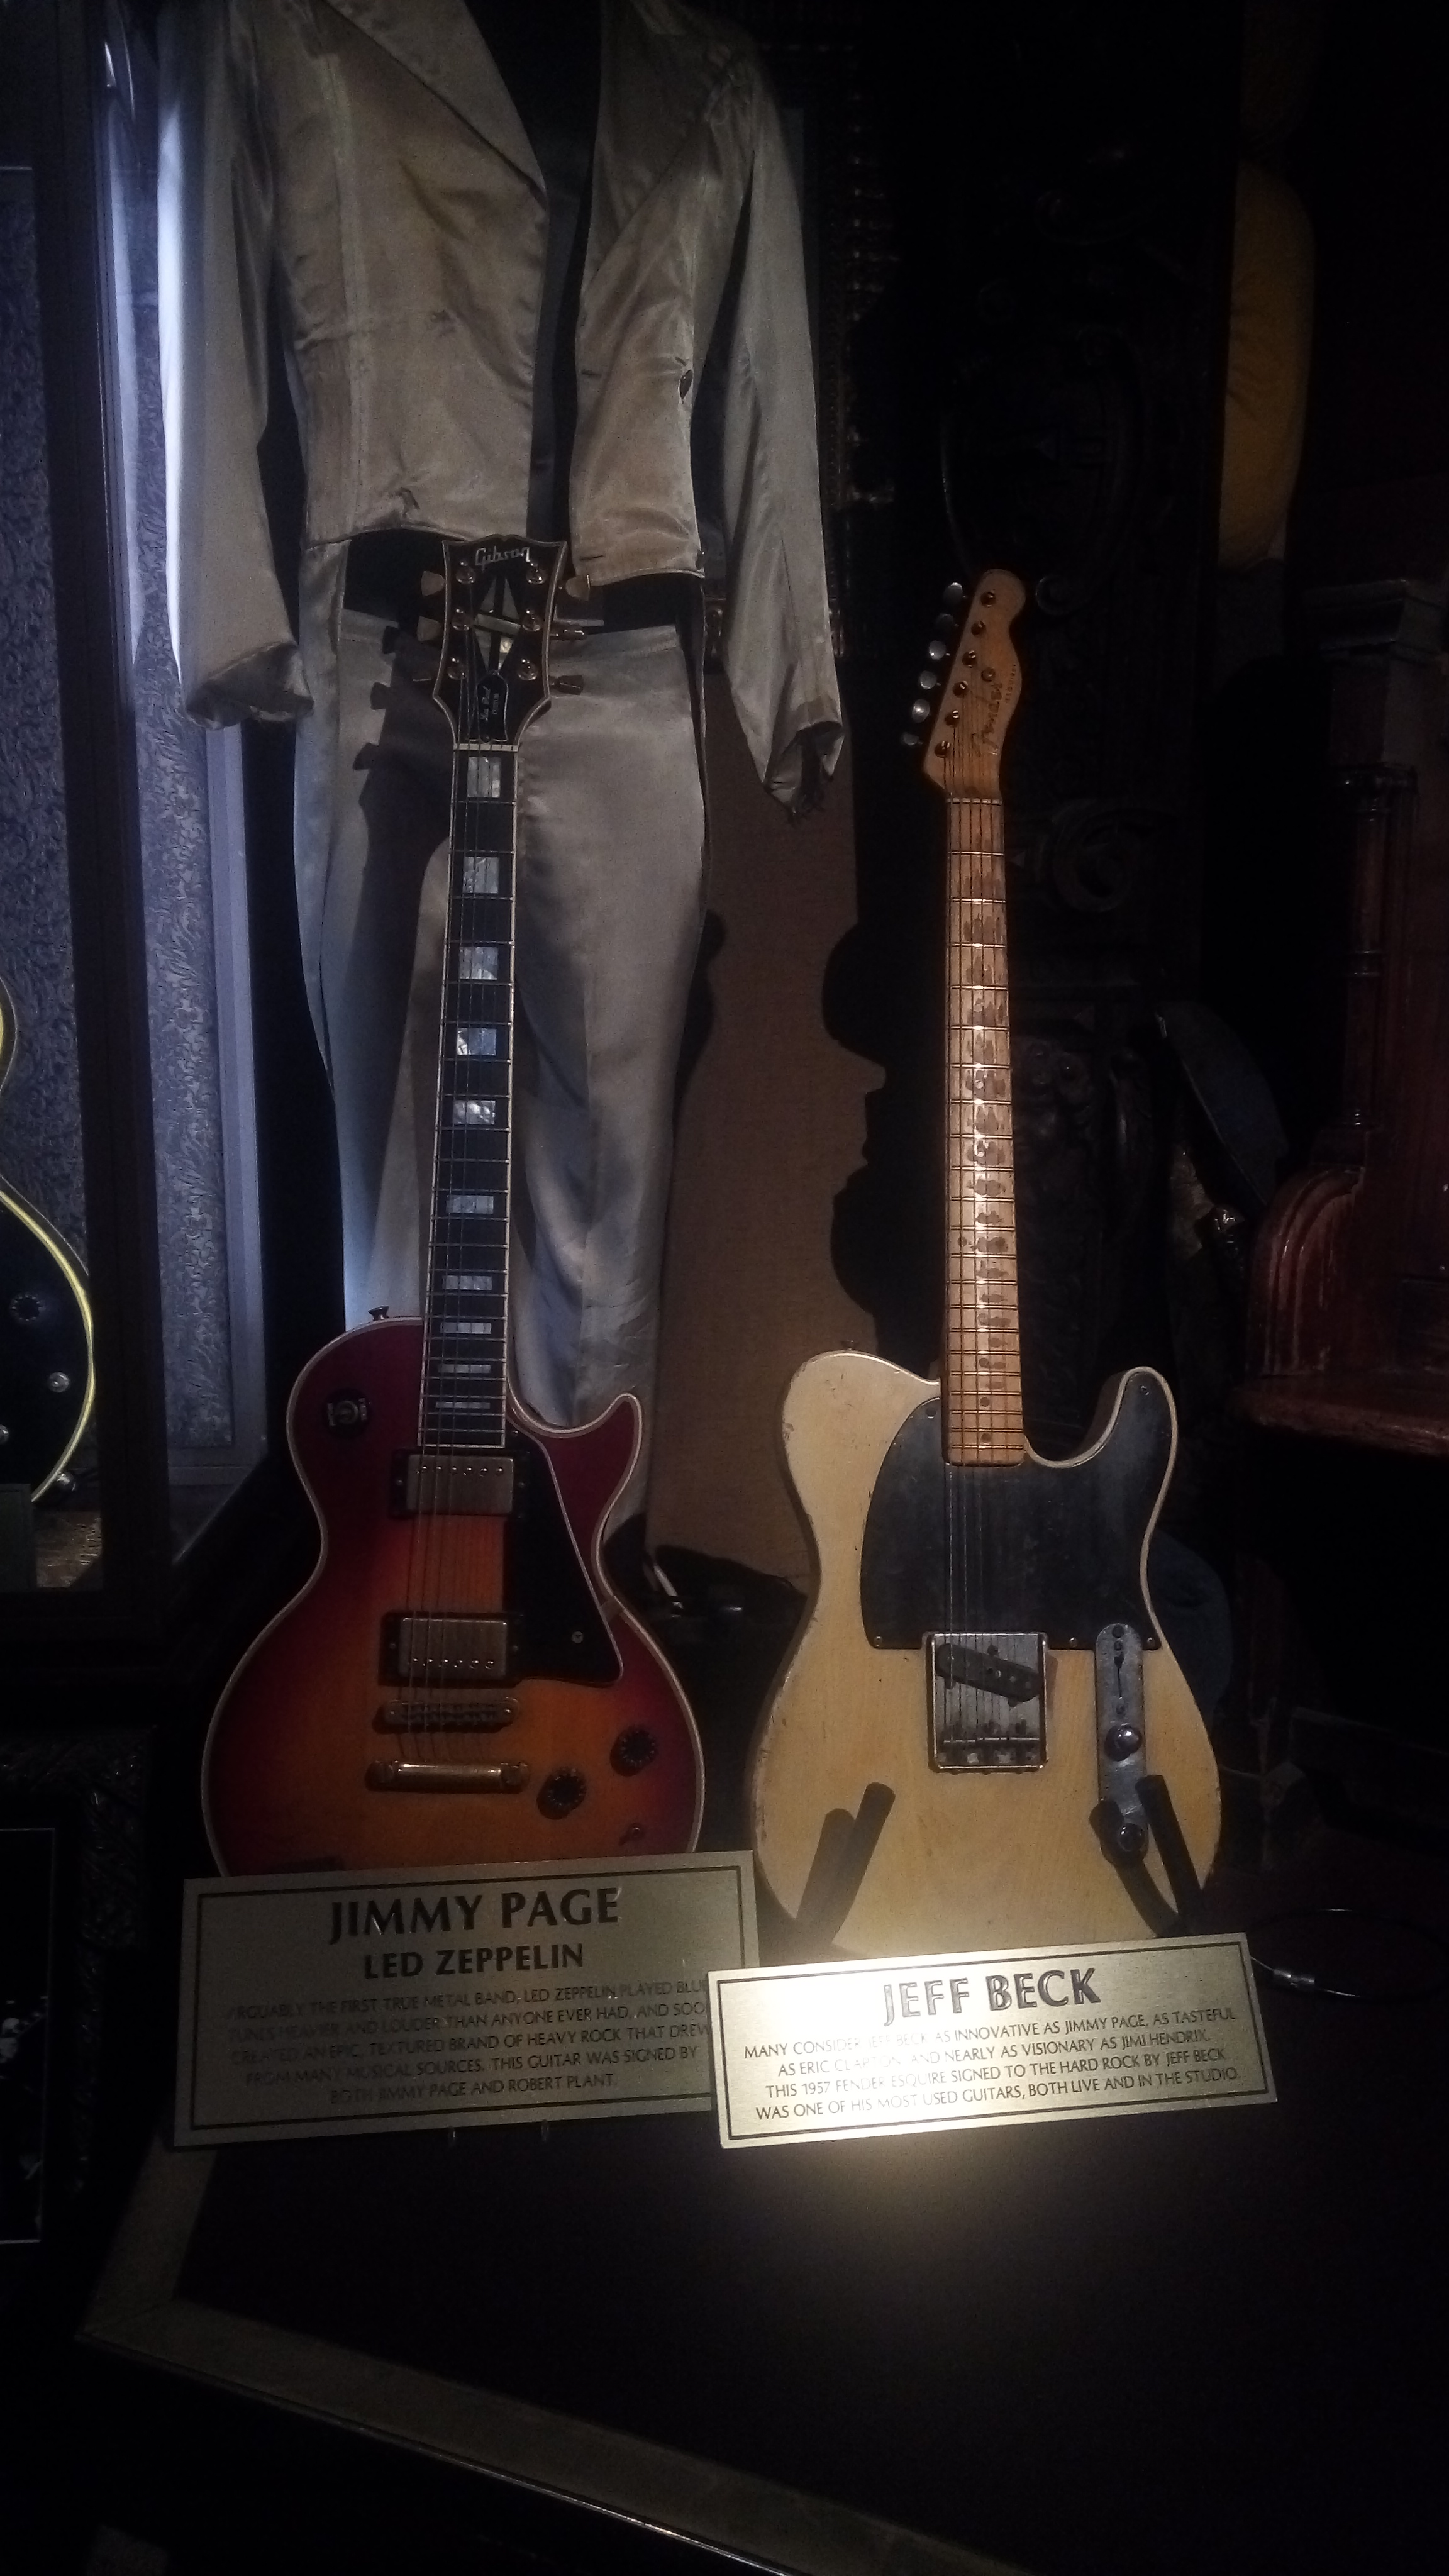 Di quale chitarra di Jimmy Page si tratta?